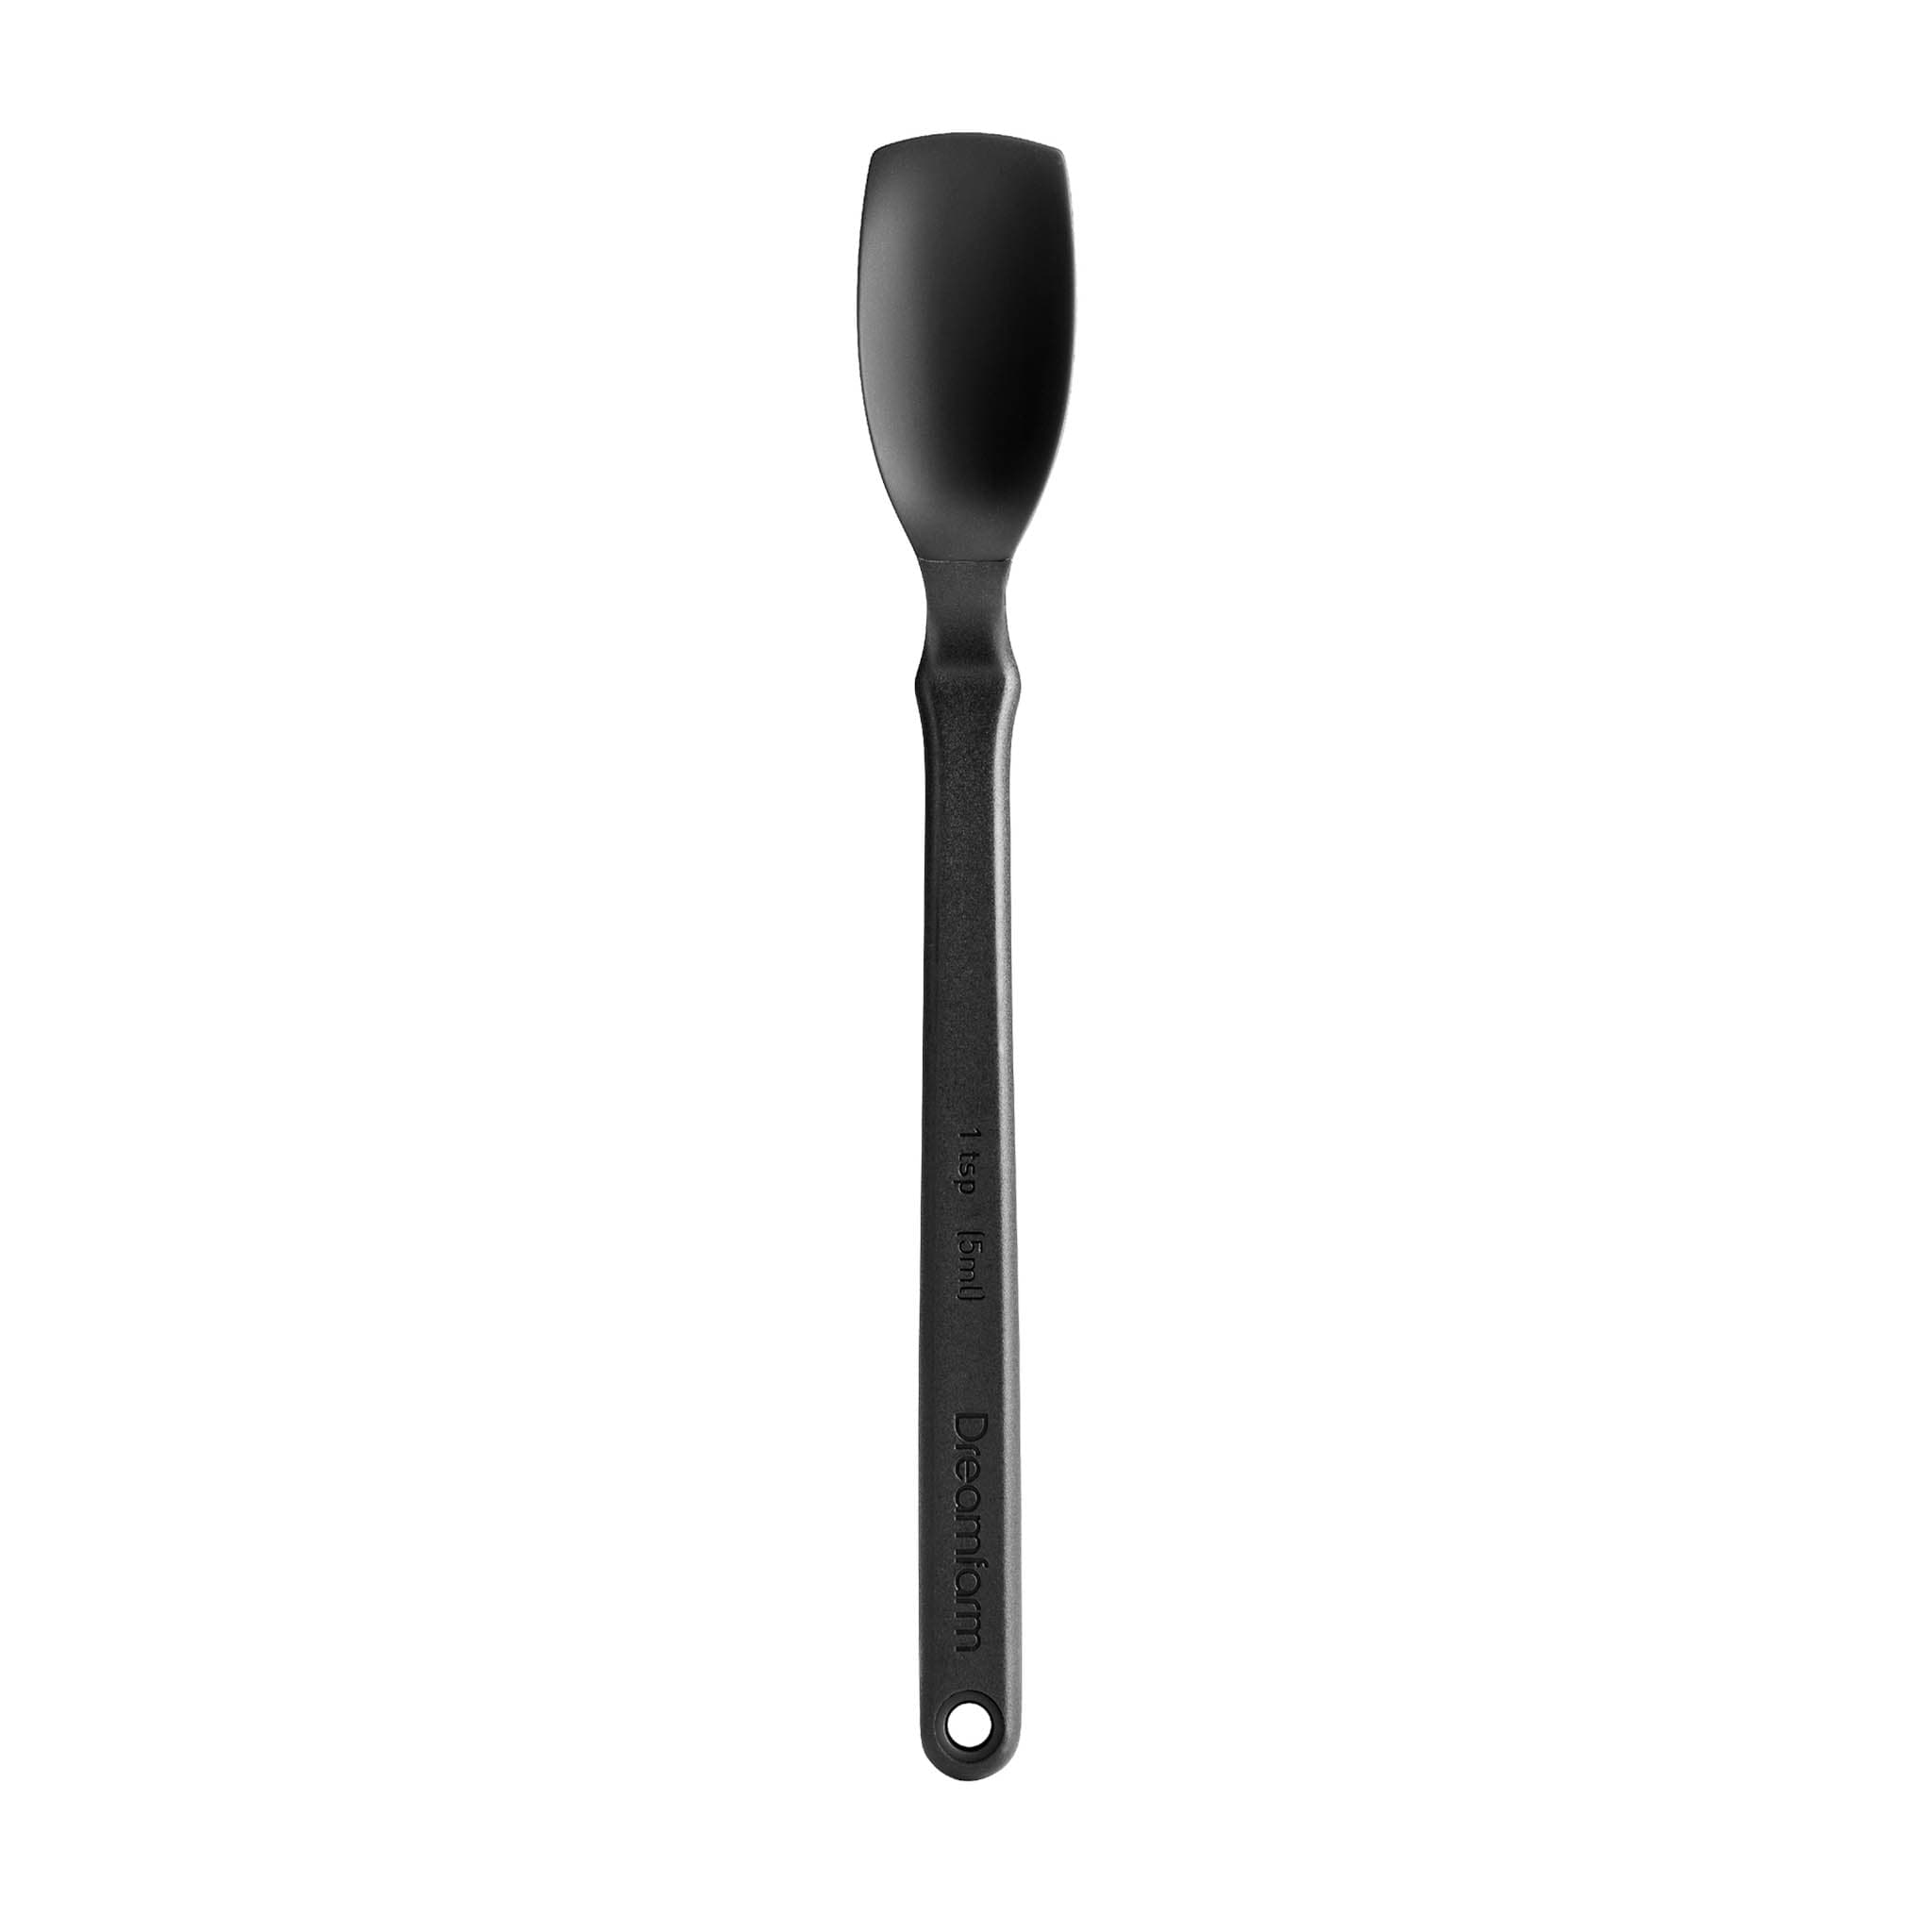 Dreamfarm Black Mini Supoon Silicone Spoon